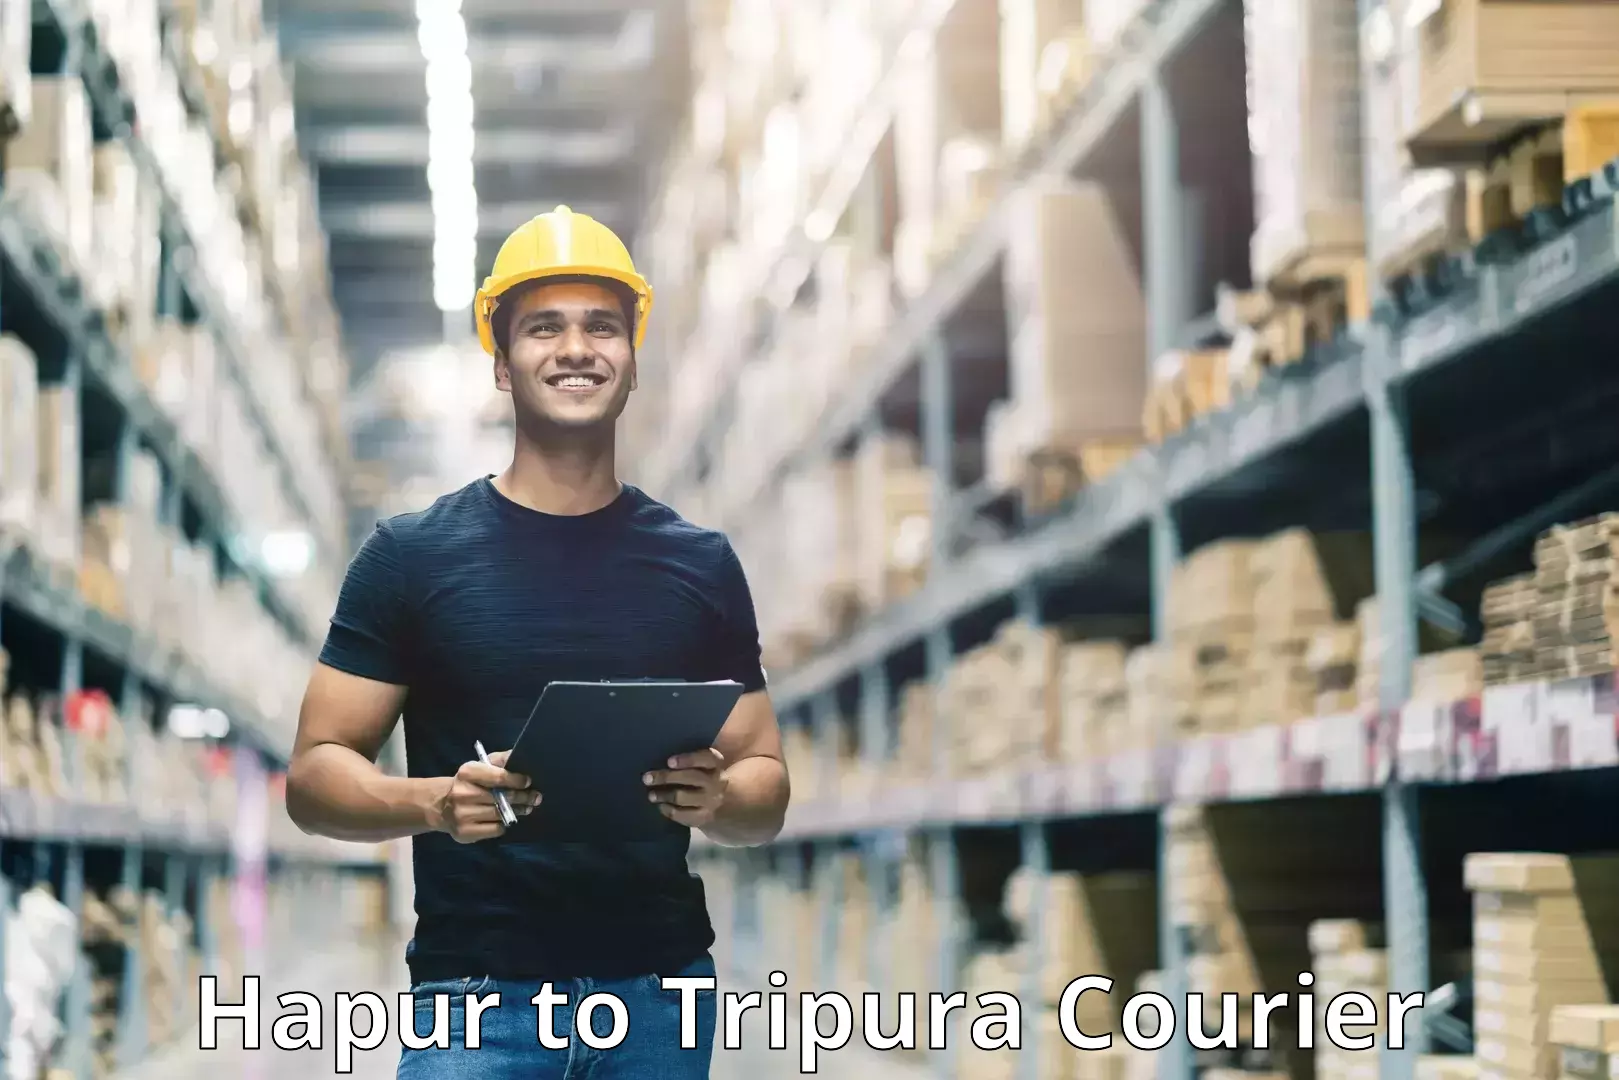 Customer-focused courier Hapur to North Tripura